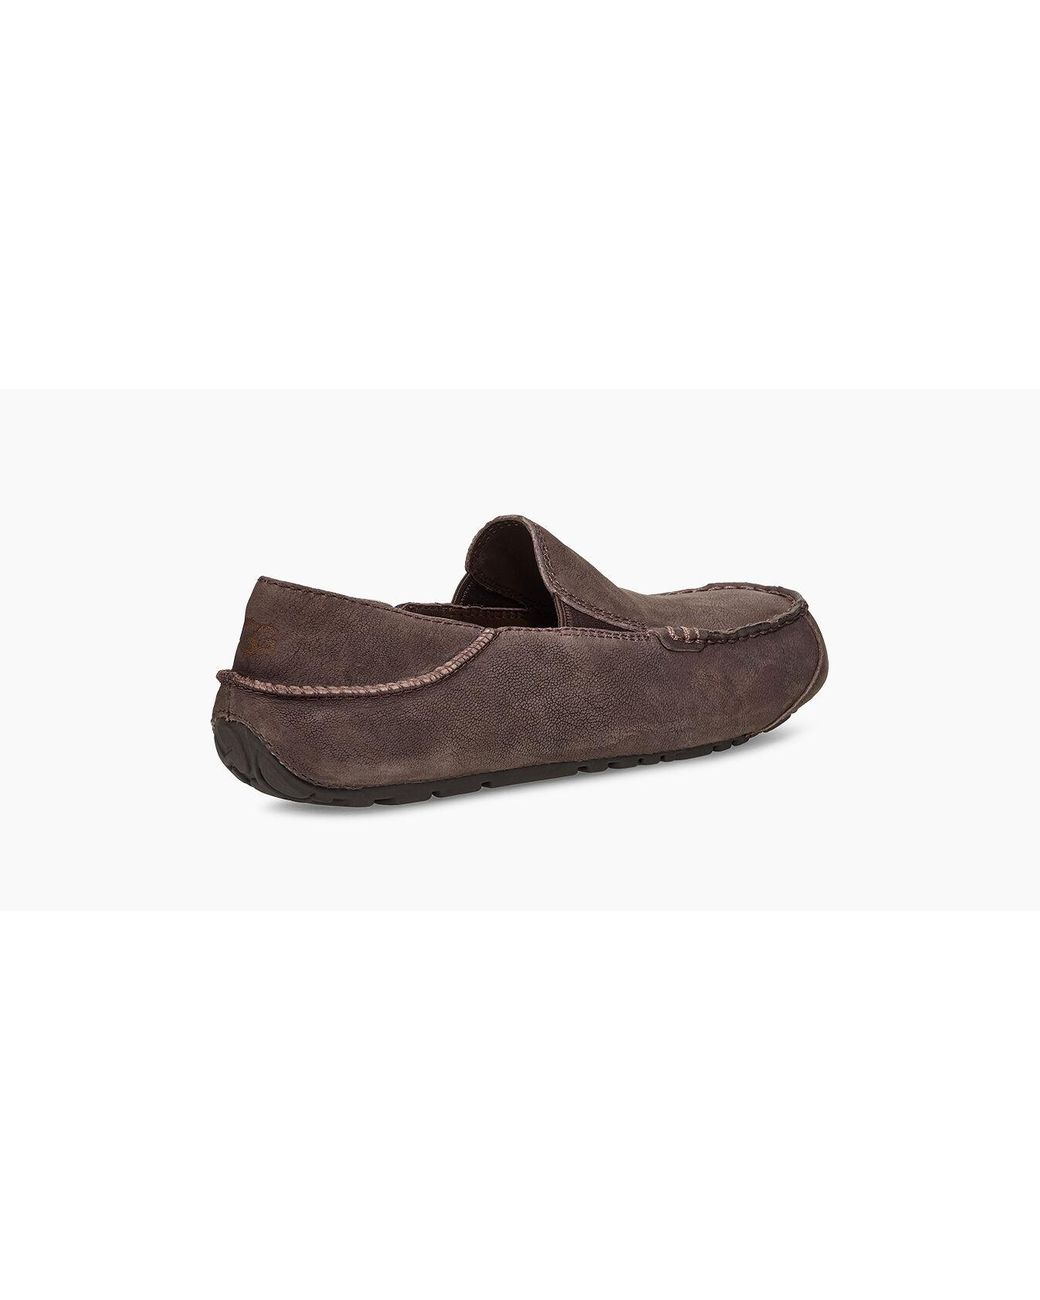 upshaw slipper